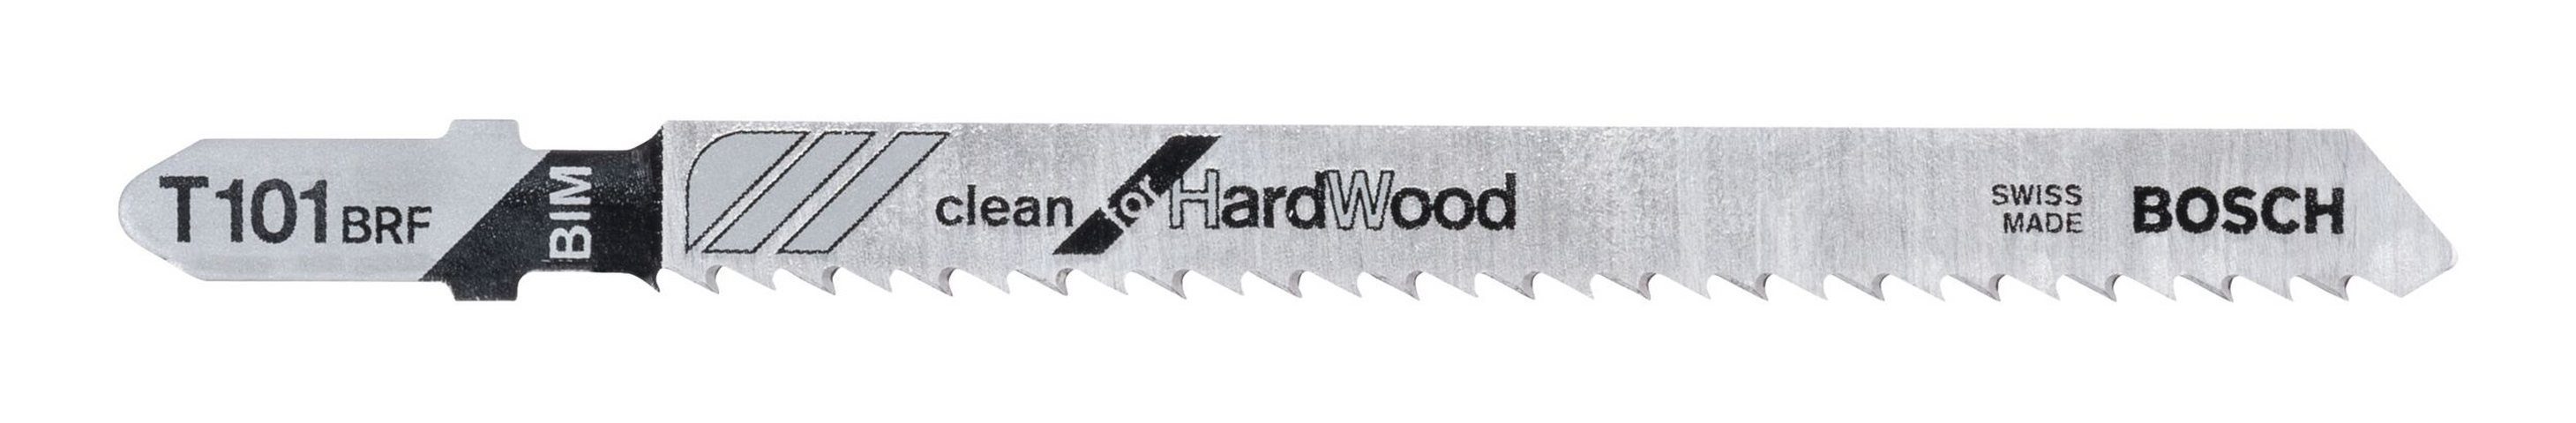 BOSCH Stichsägeblatt (5 Stück), T 101 BRF Clean for Hard Wood - 5er-Pack | Stichsägeblätter